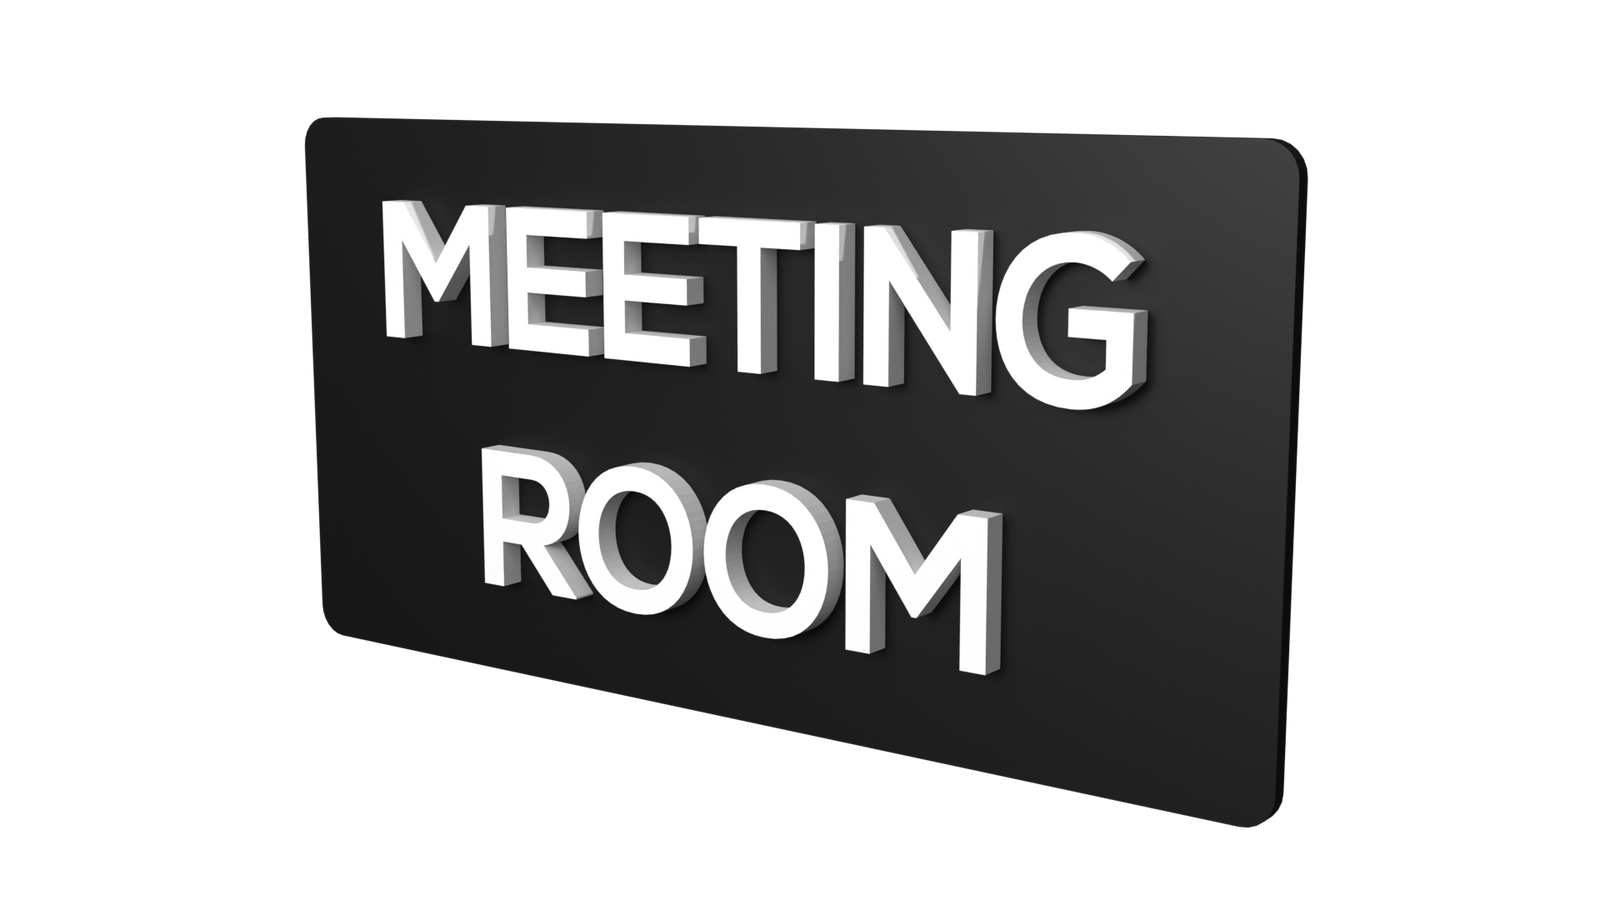 Meeting Room signboard | Meeting Room Signage